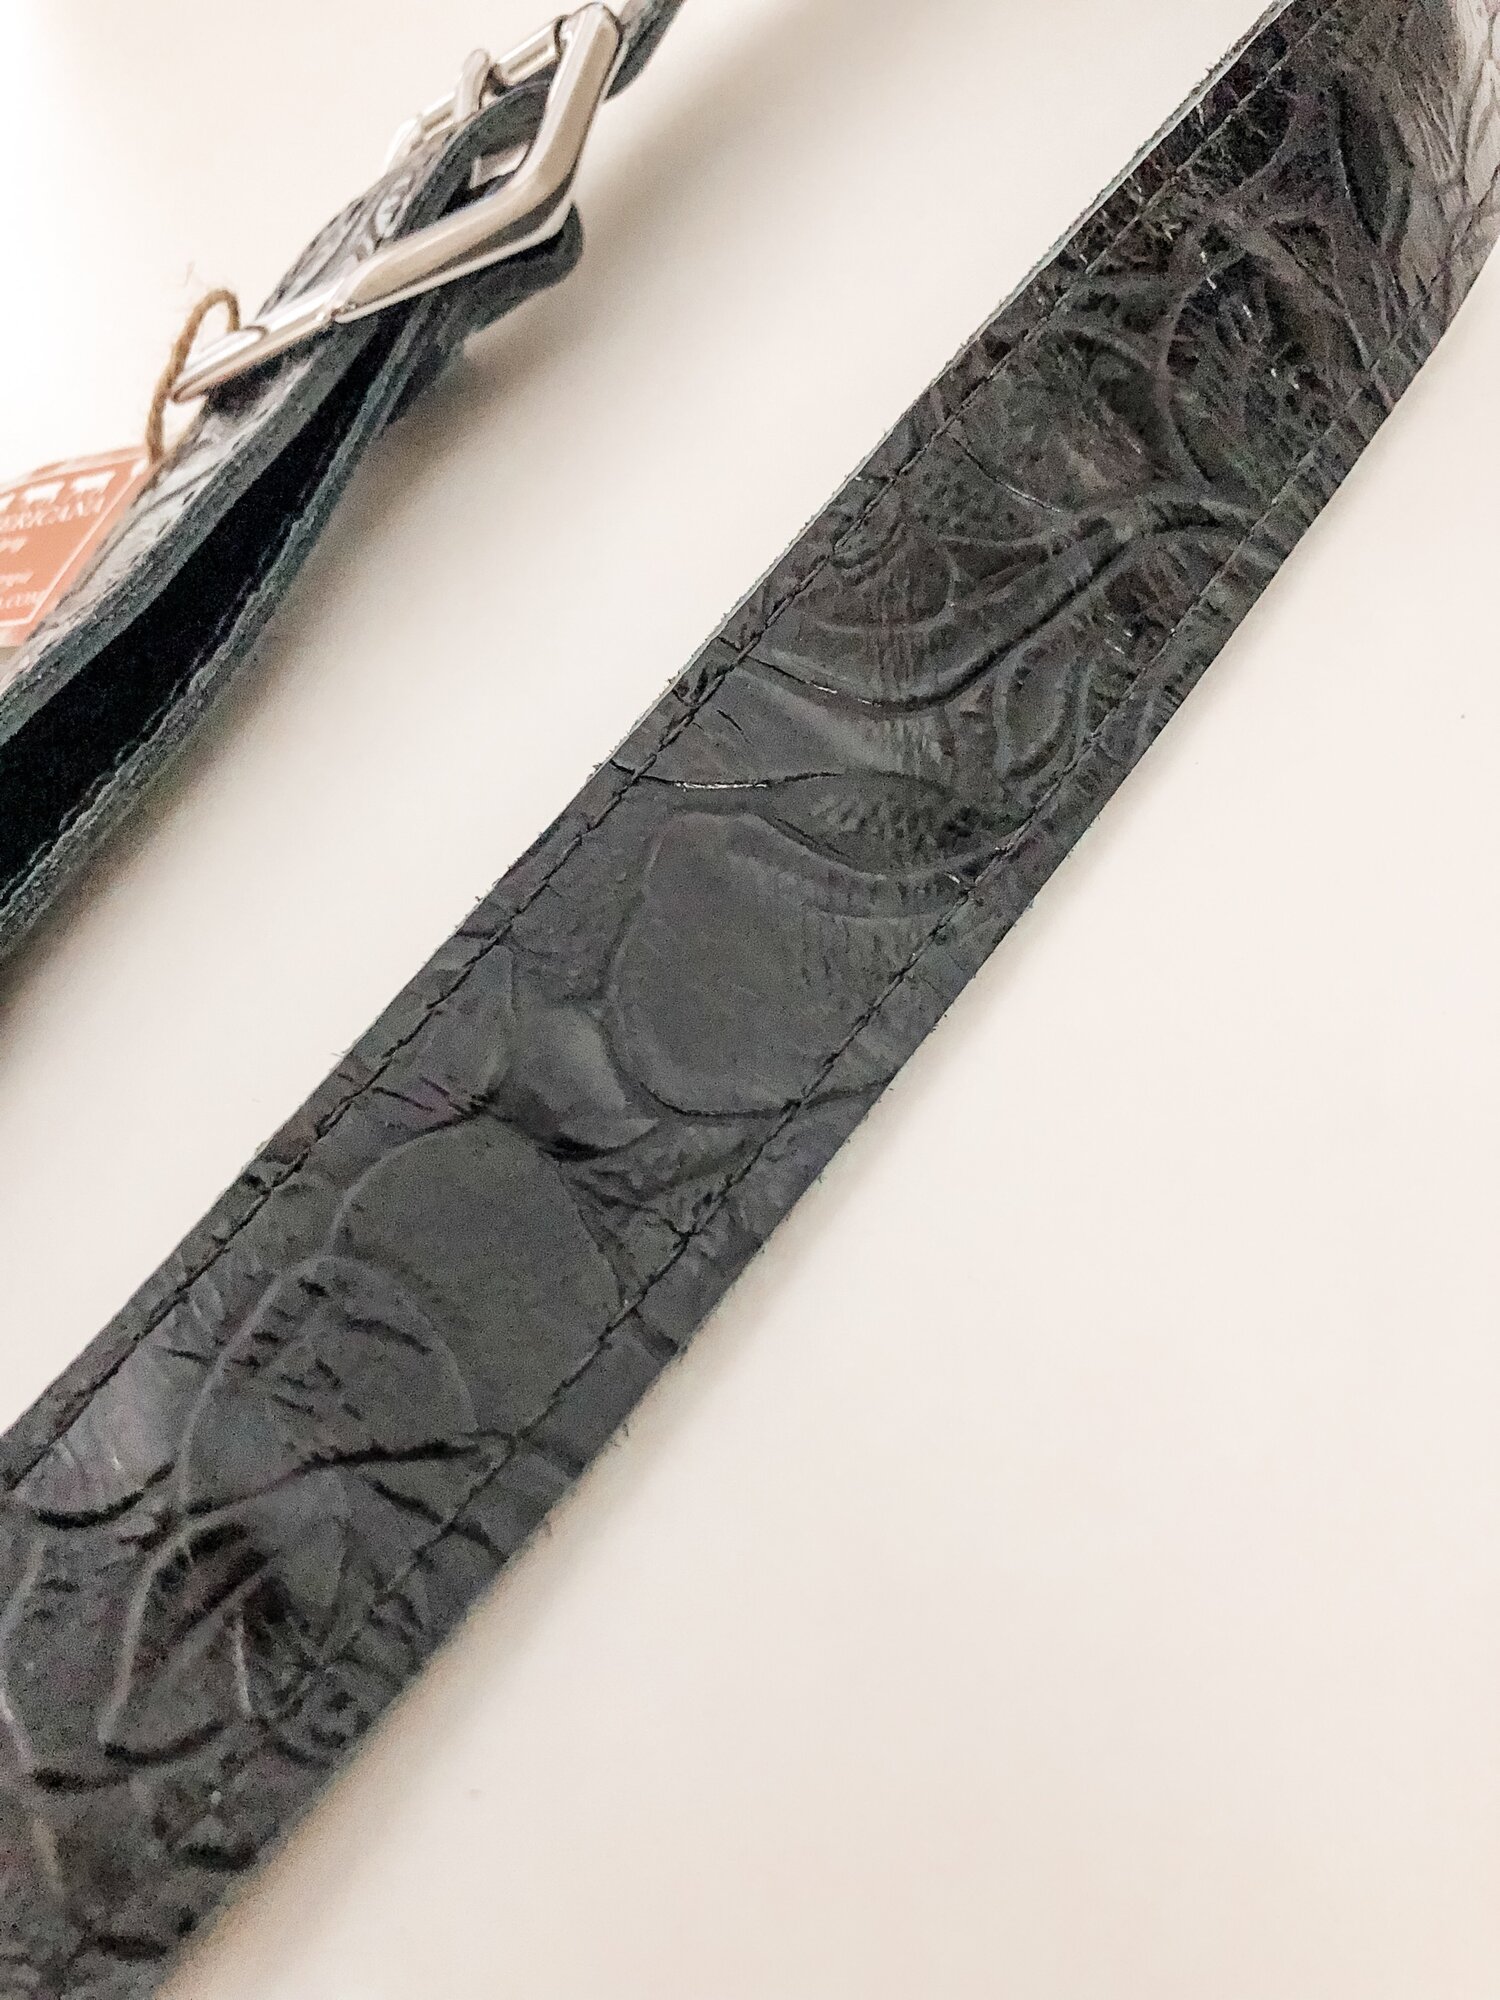 Leather Purse Strap, Adjustable Crossbody, Black Rose – H&M Ranch Store